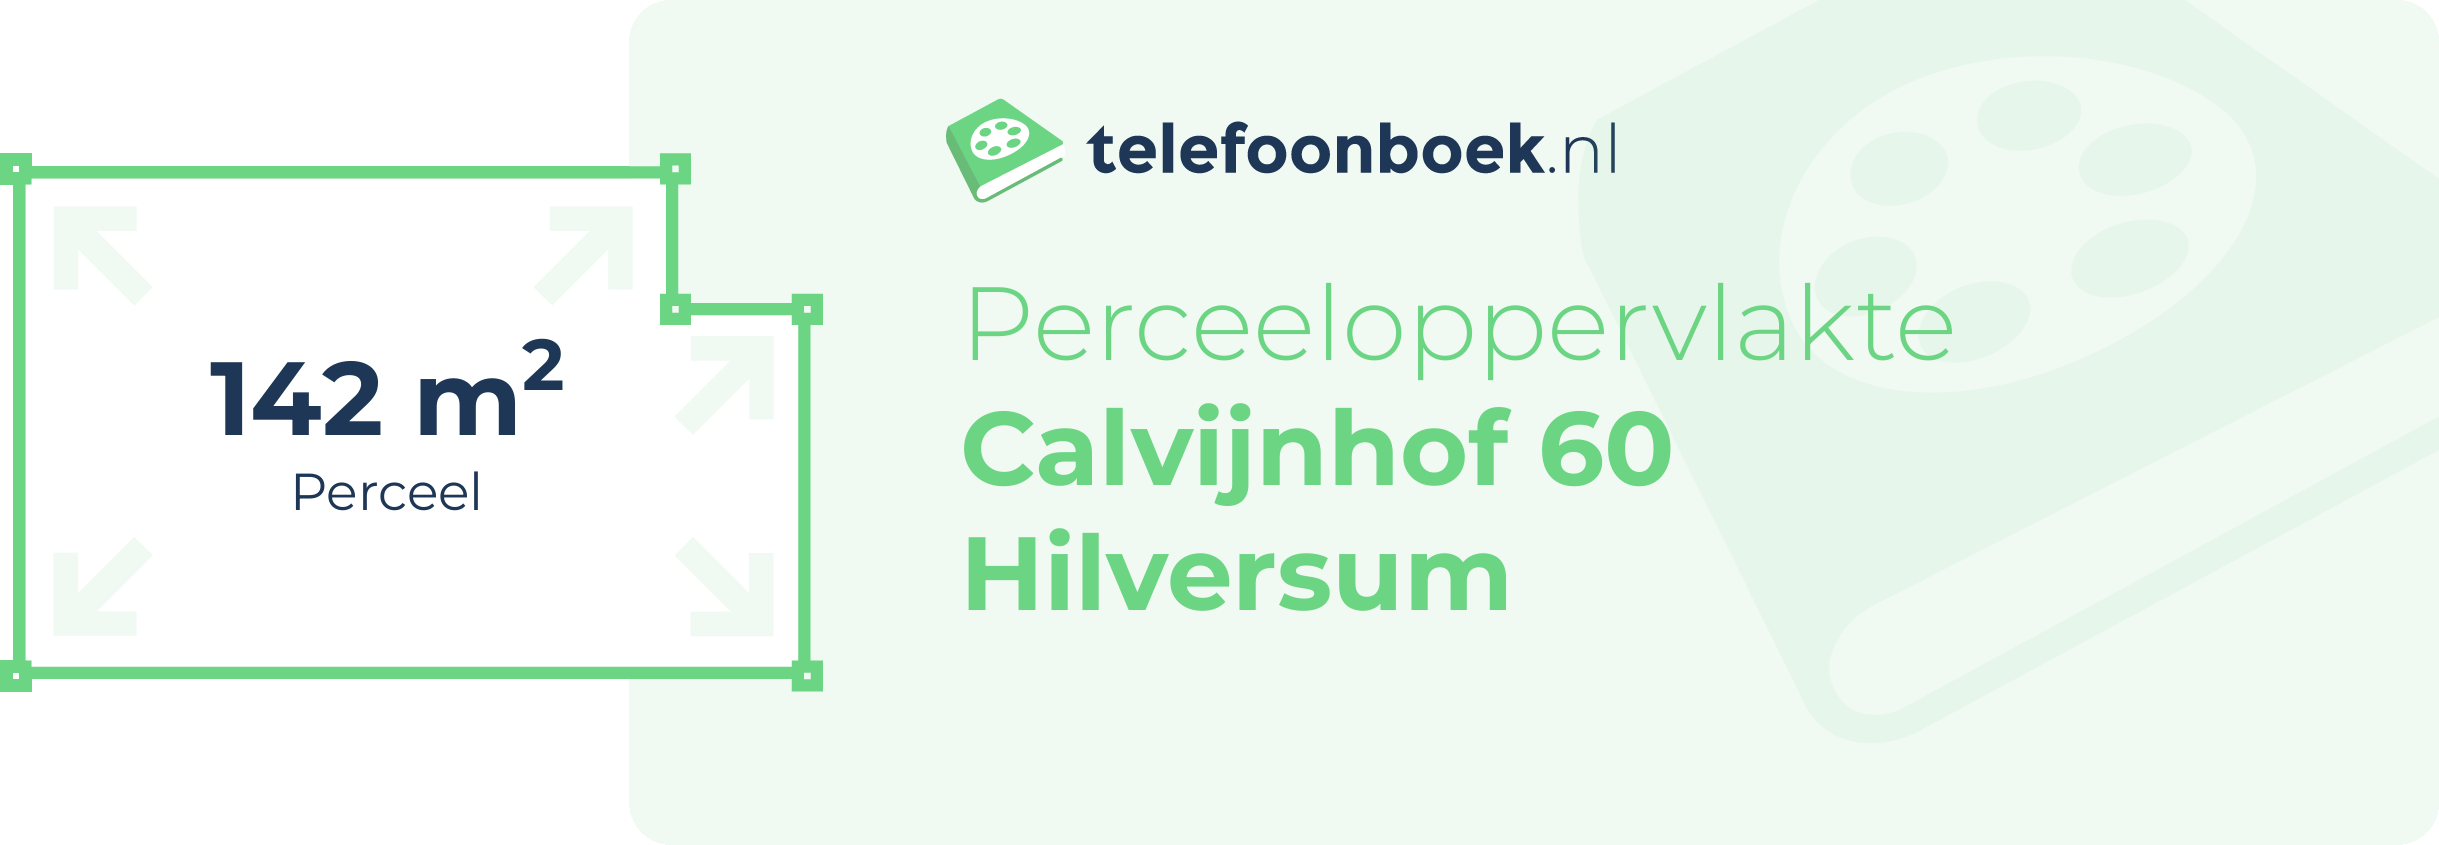 Perceeloppervlakte Calvijnhof 60 Hilversum